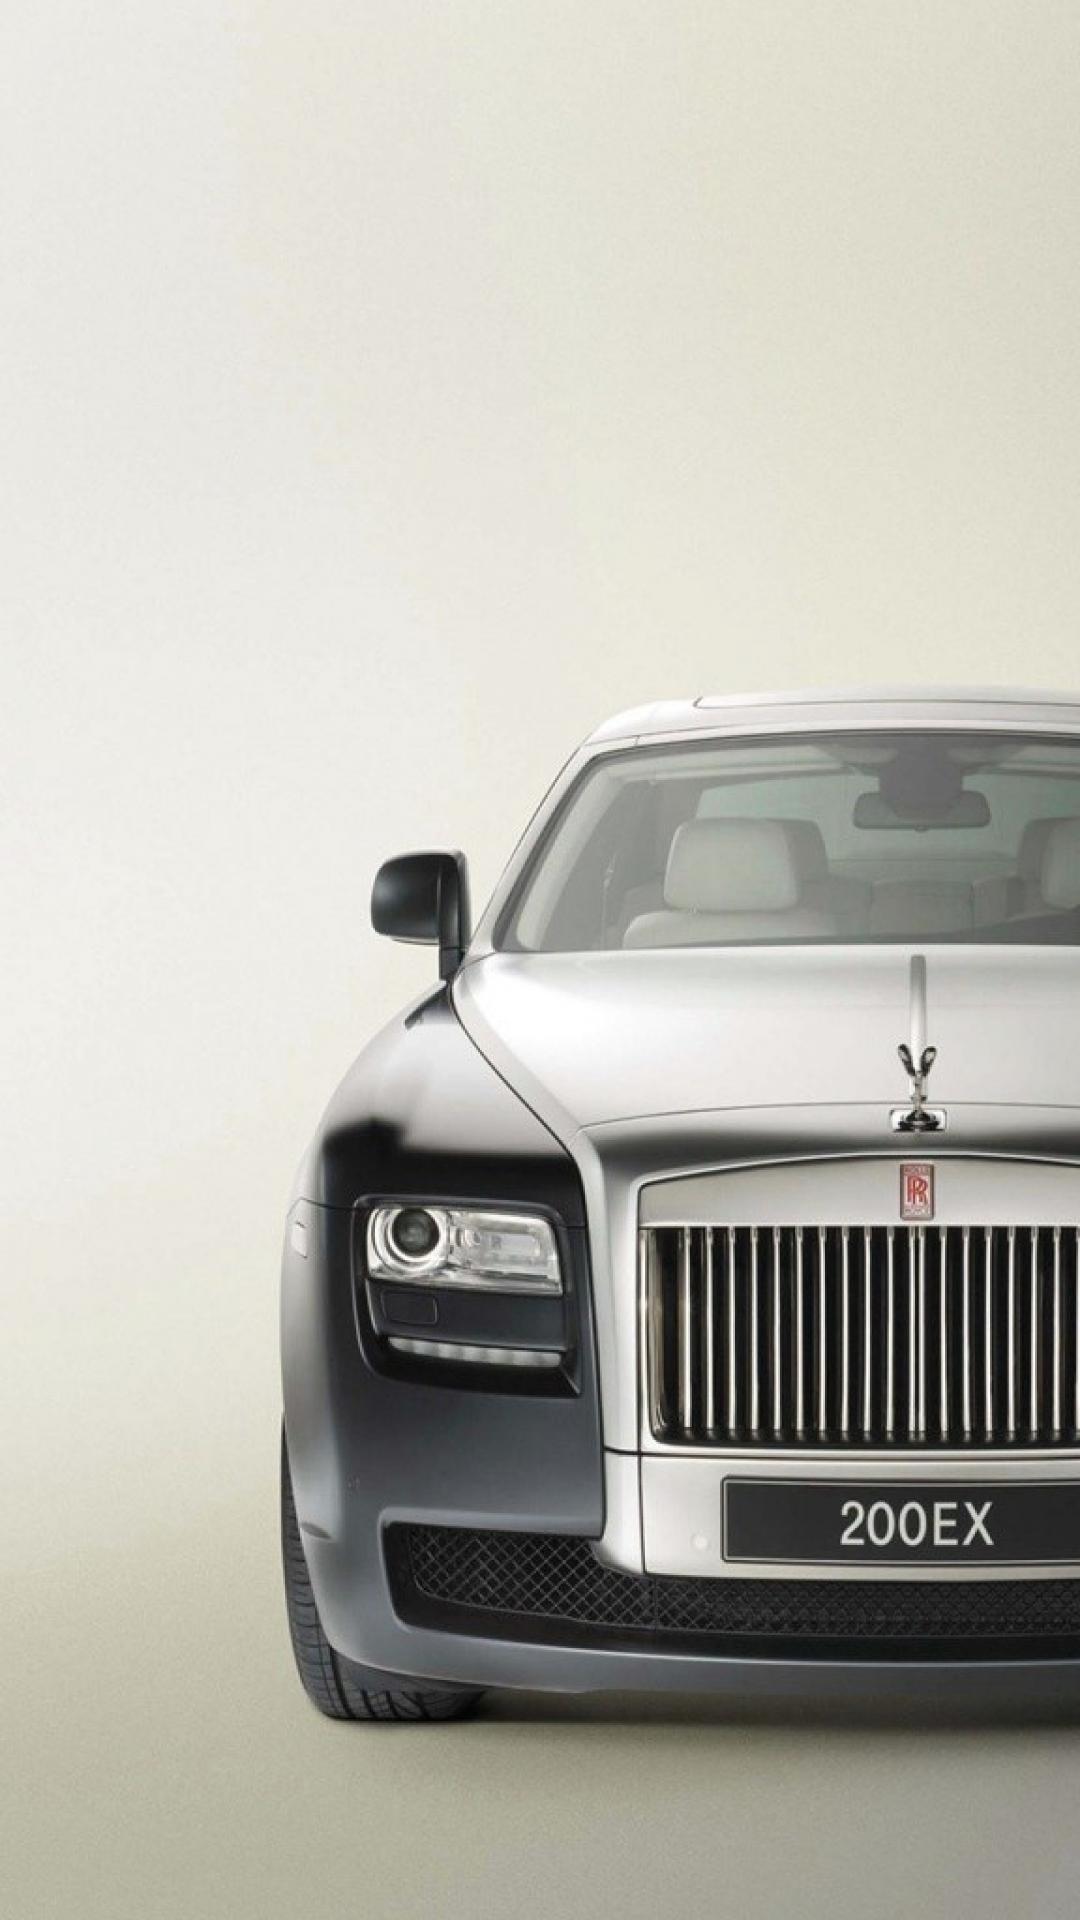 Rolls Royce 200ex , HD Wallpaper & Backgrounds